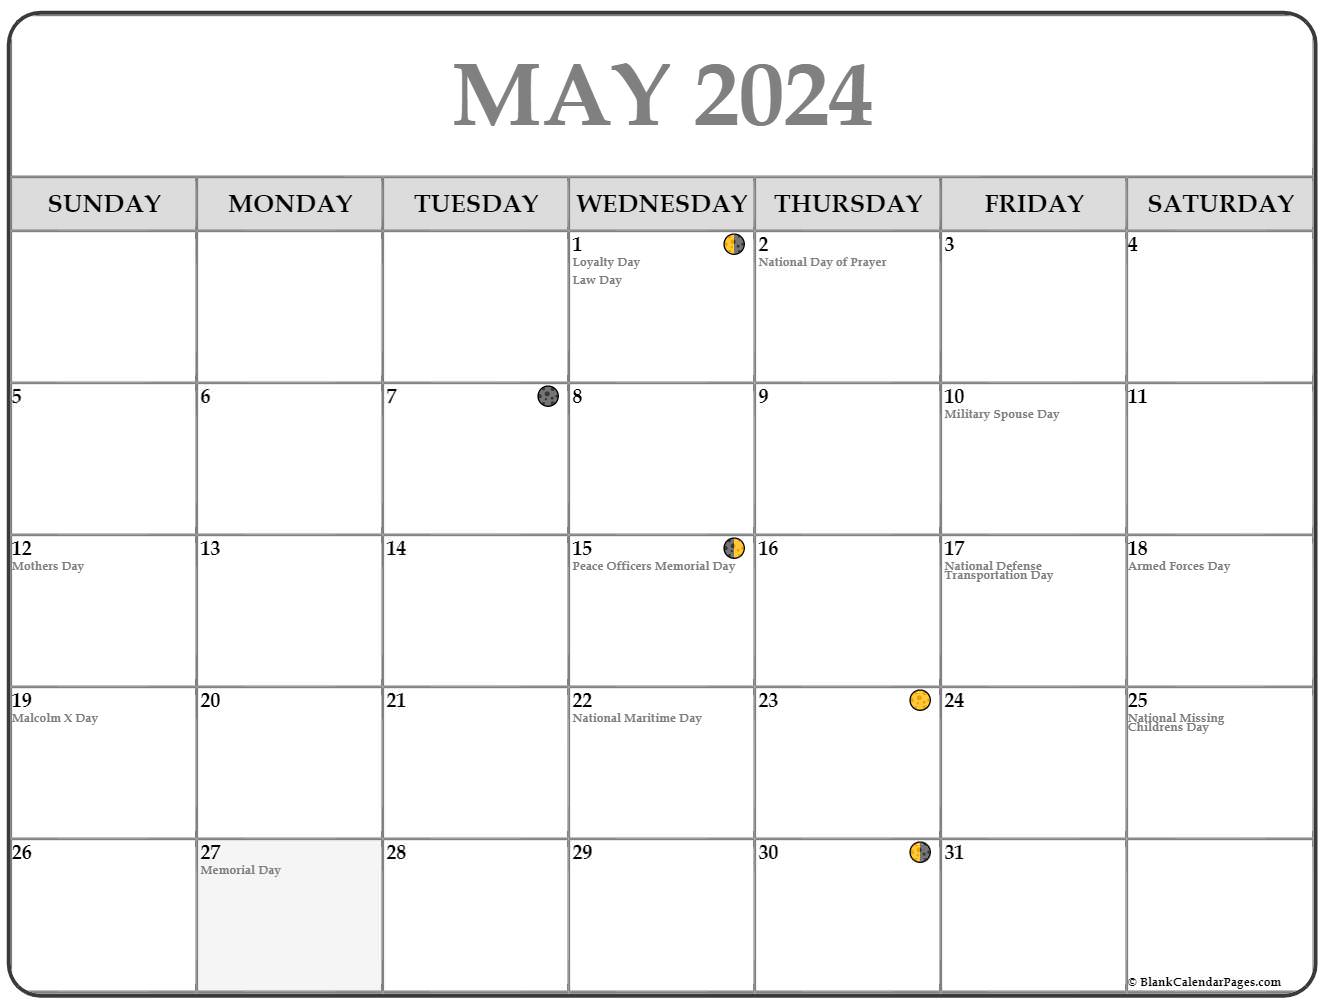 May 2022 Lunar Calendar May 2022 Lunar Calendar | Moon Phase Calendar